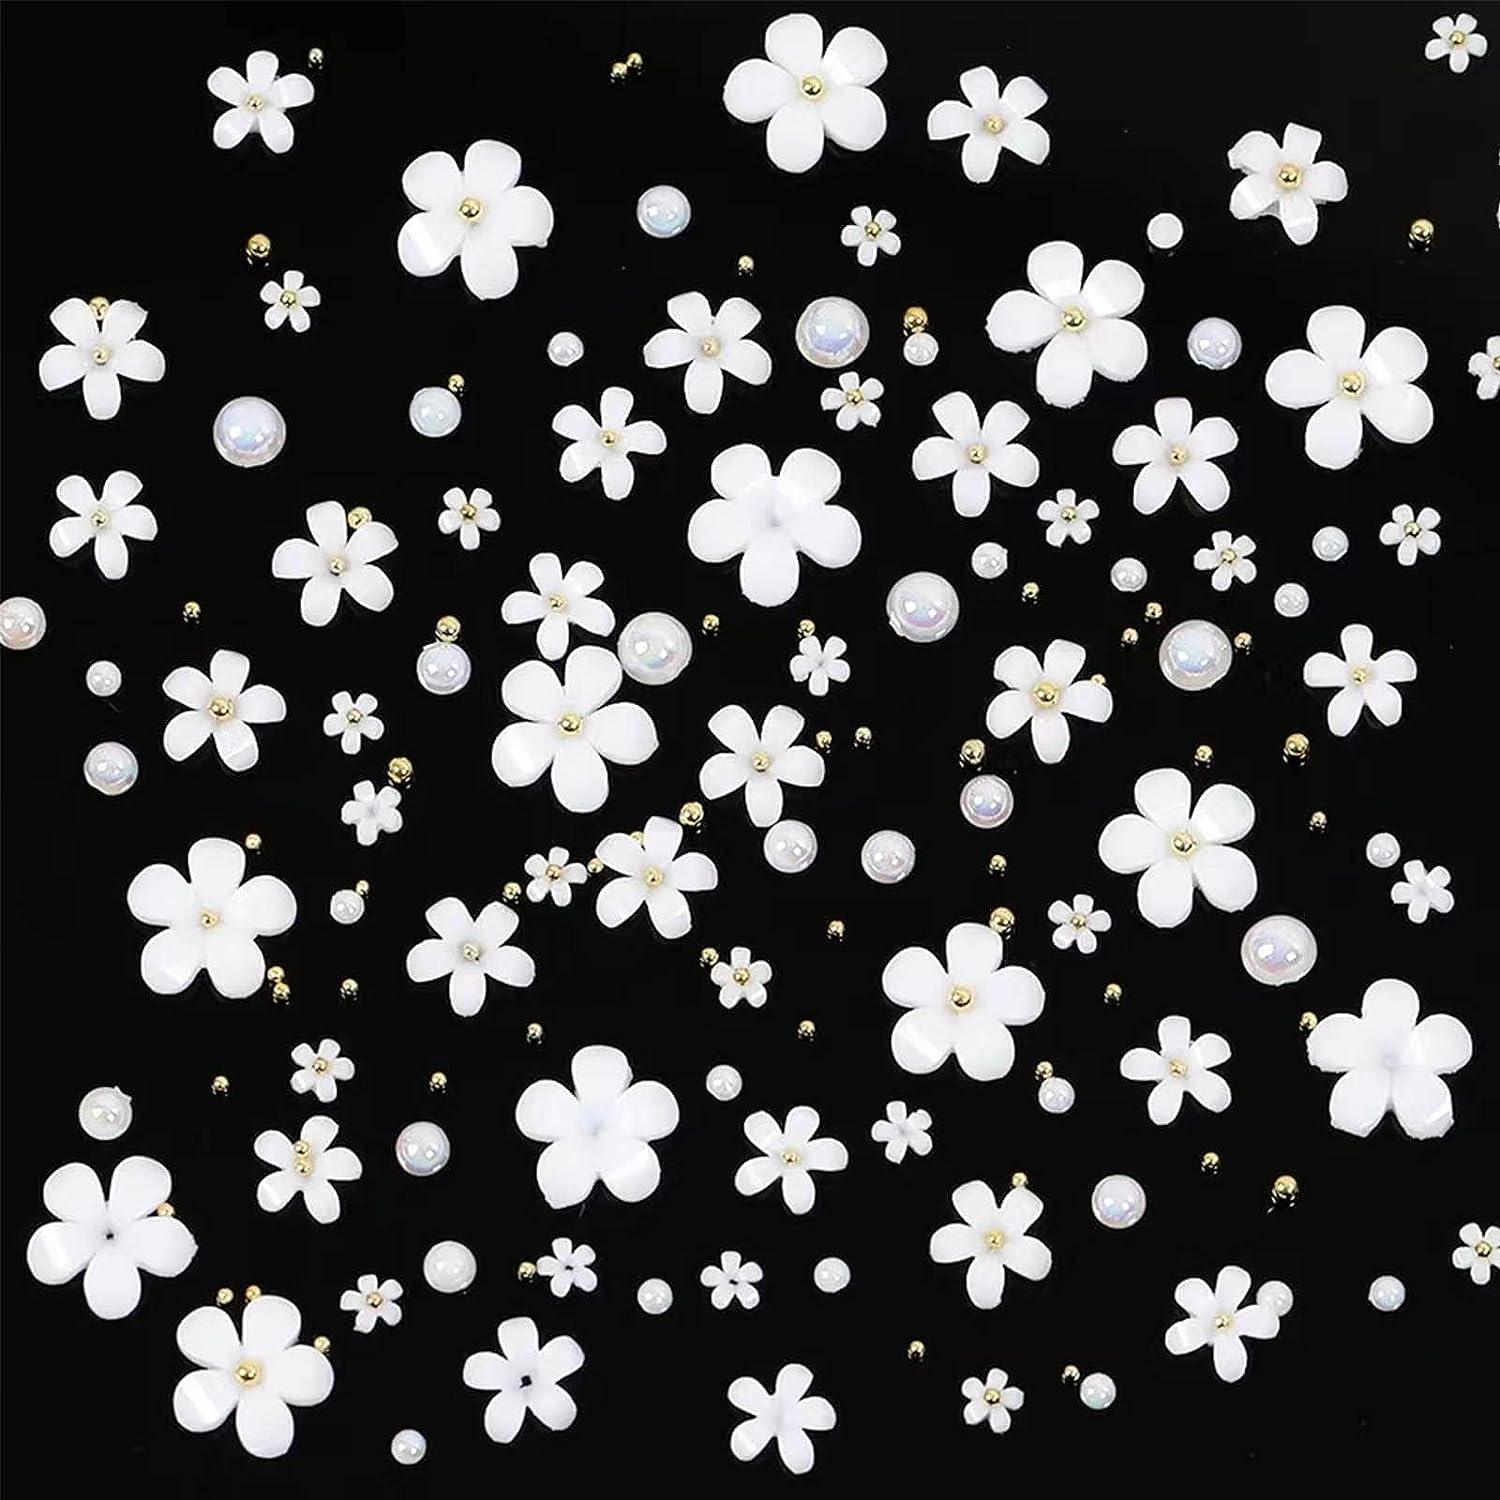 YOSOMK 3D Flower Nail Art Charms White Flowers Nail Charms with